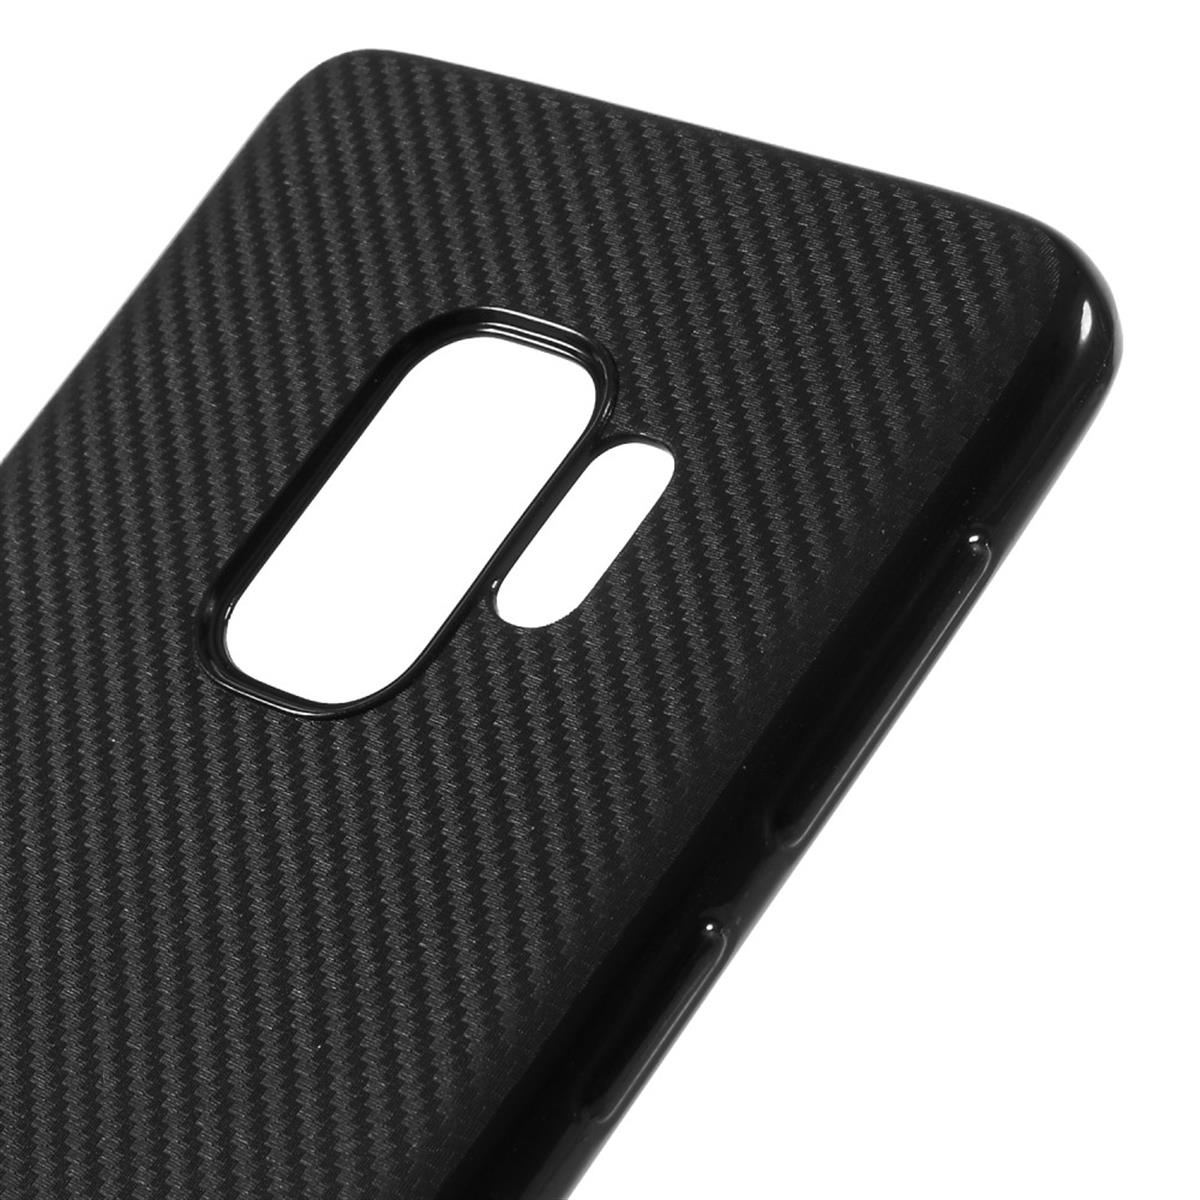 Hülle für Samsung Galaxy S9 Handyhülle Cover Schutzhülle Soft Case Carbonfarben